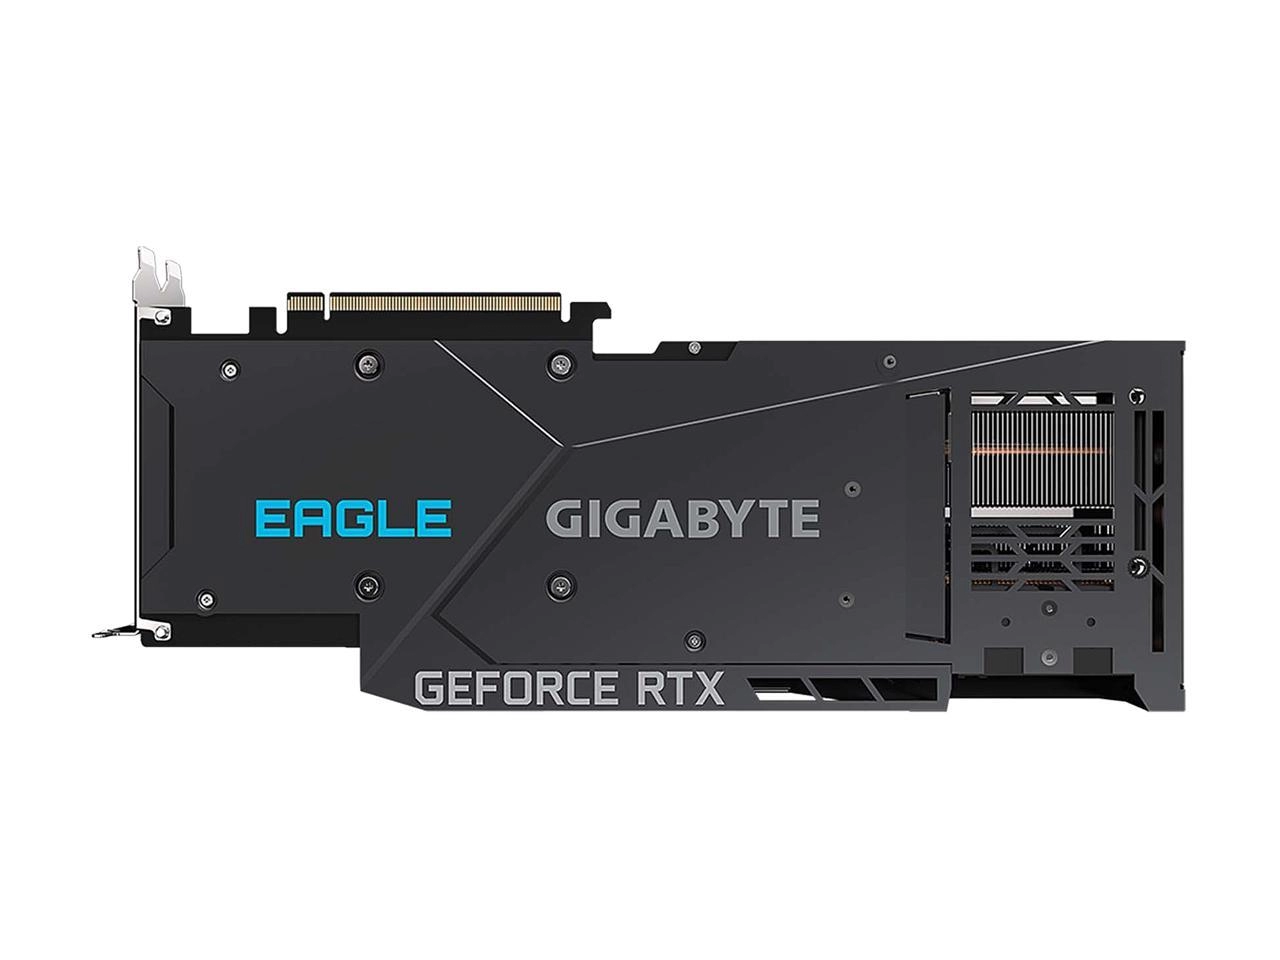 GIGABYTE GeForce RTX 3080 EAGLE 10G Behind View